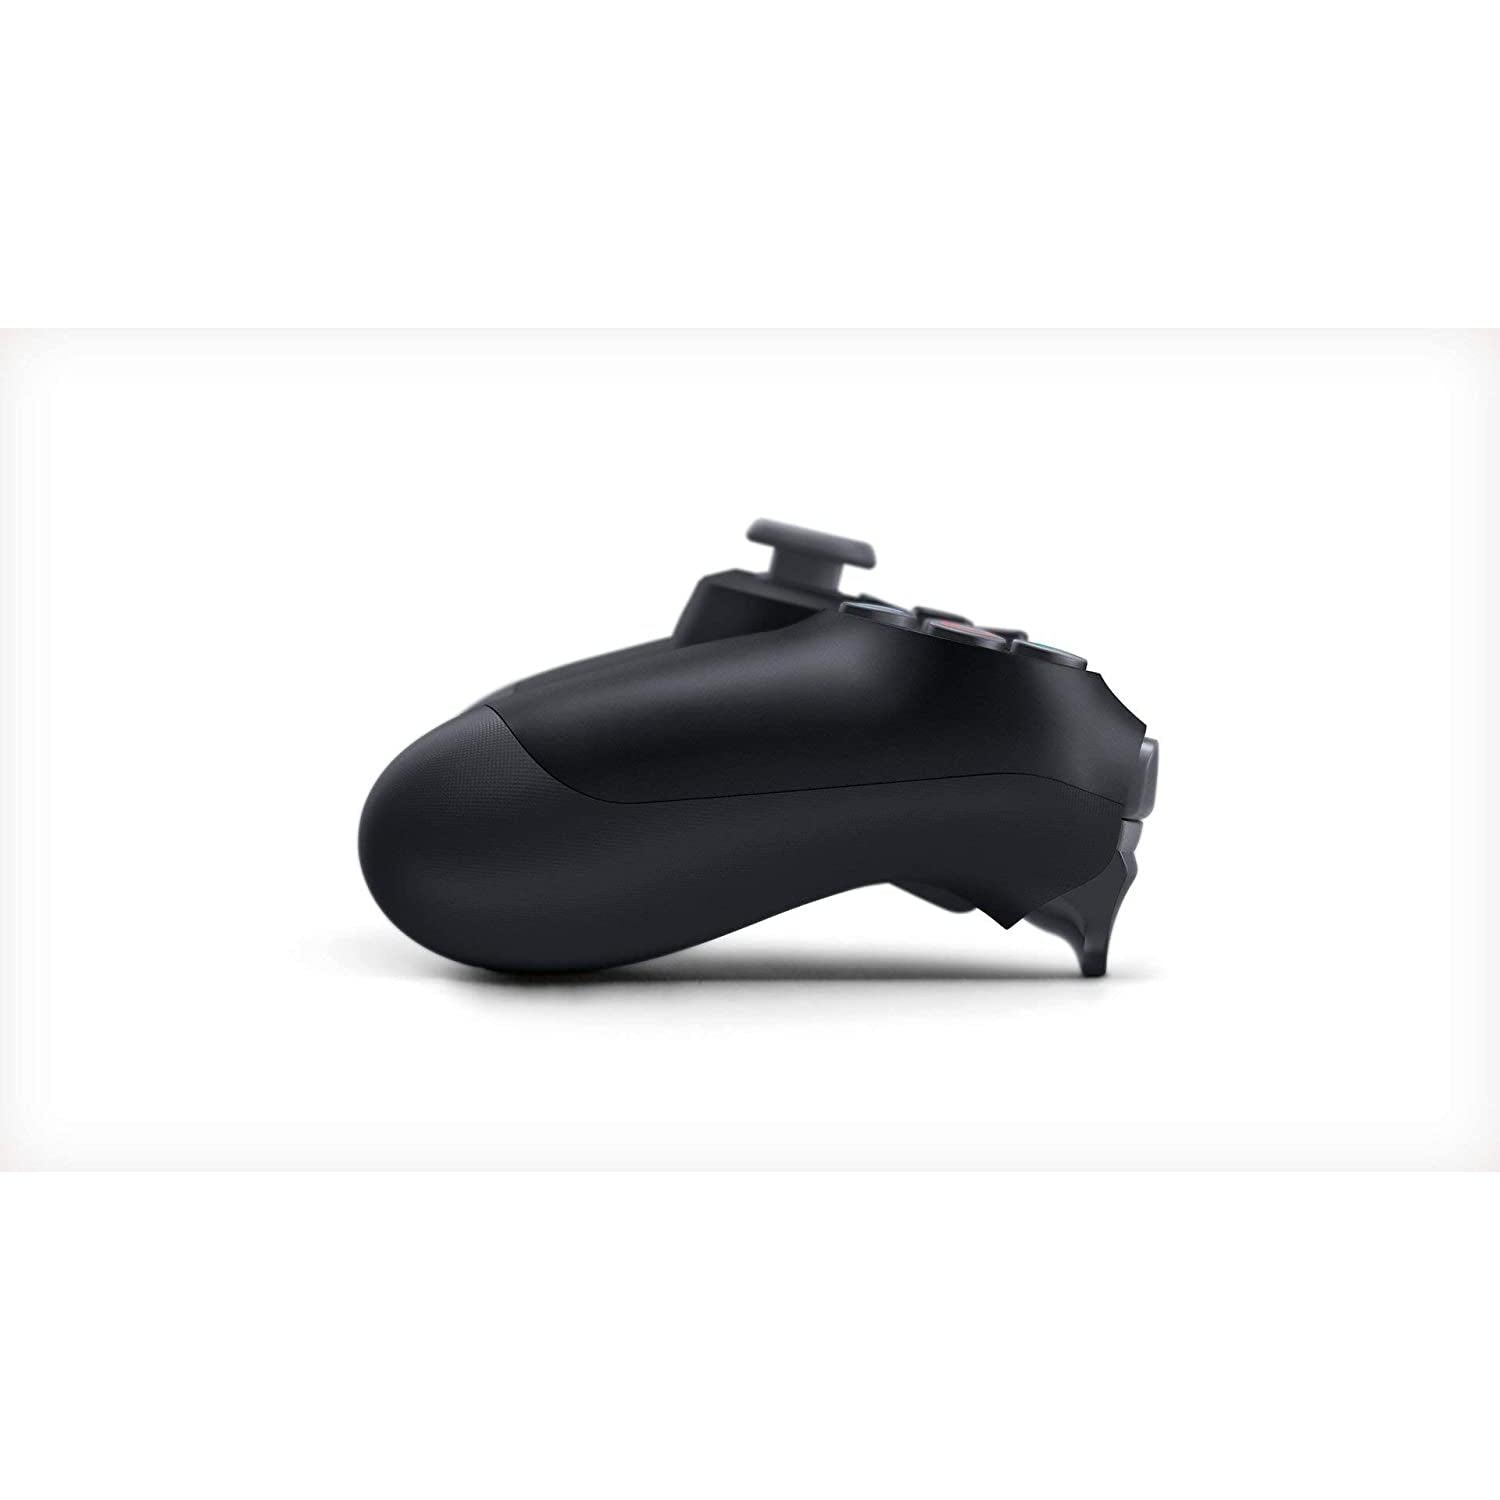 Sony-Official-PlayStation-DualShock-4-Controller-Black-4_a85ea3b3-c89f-481e-a94e-b0ac48707017